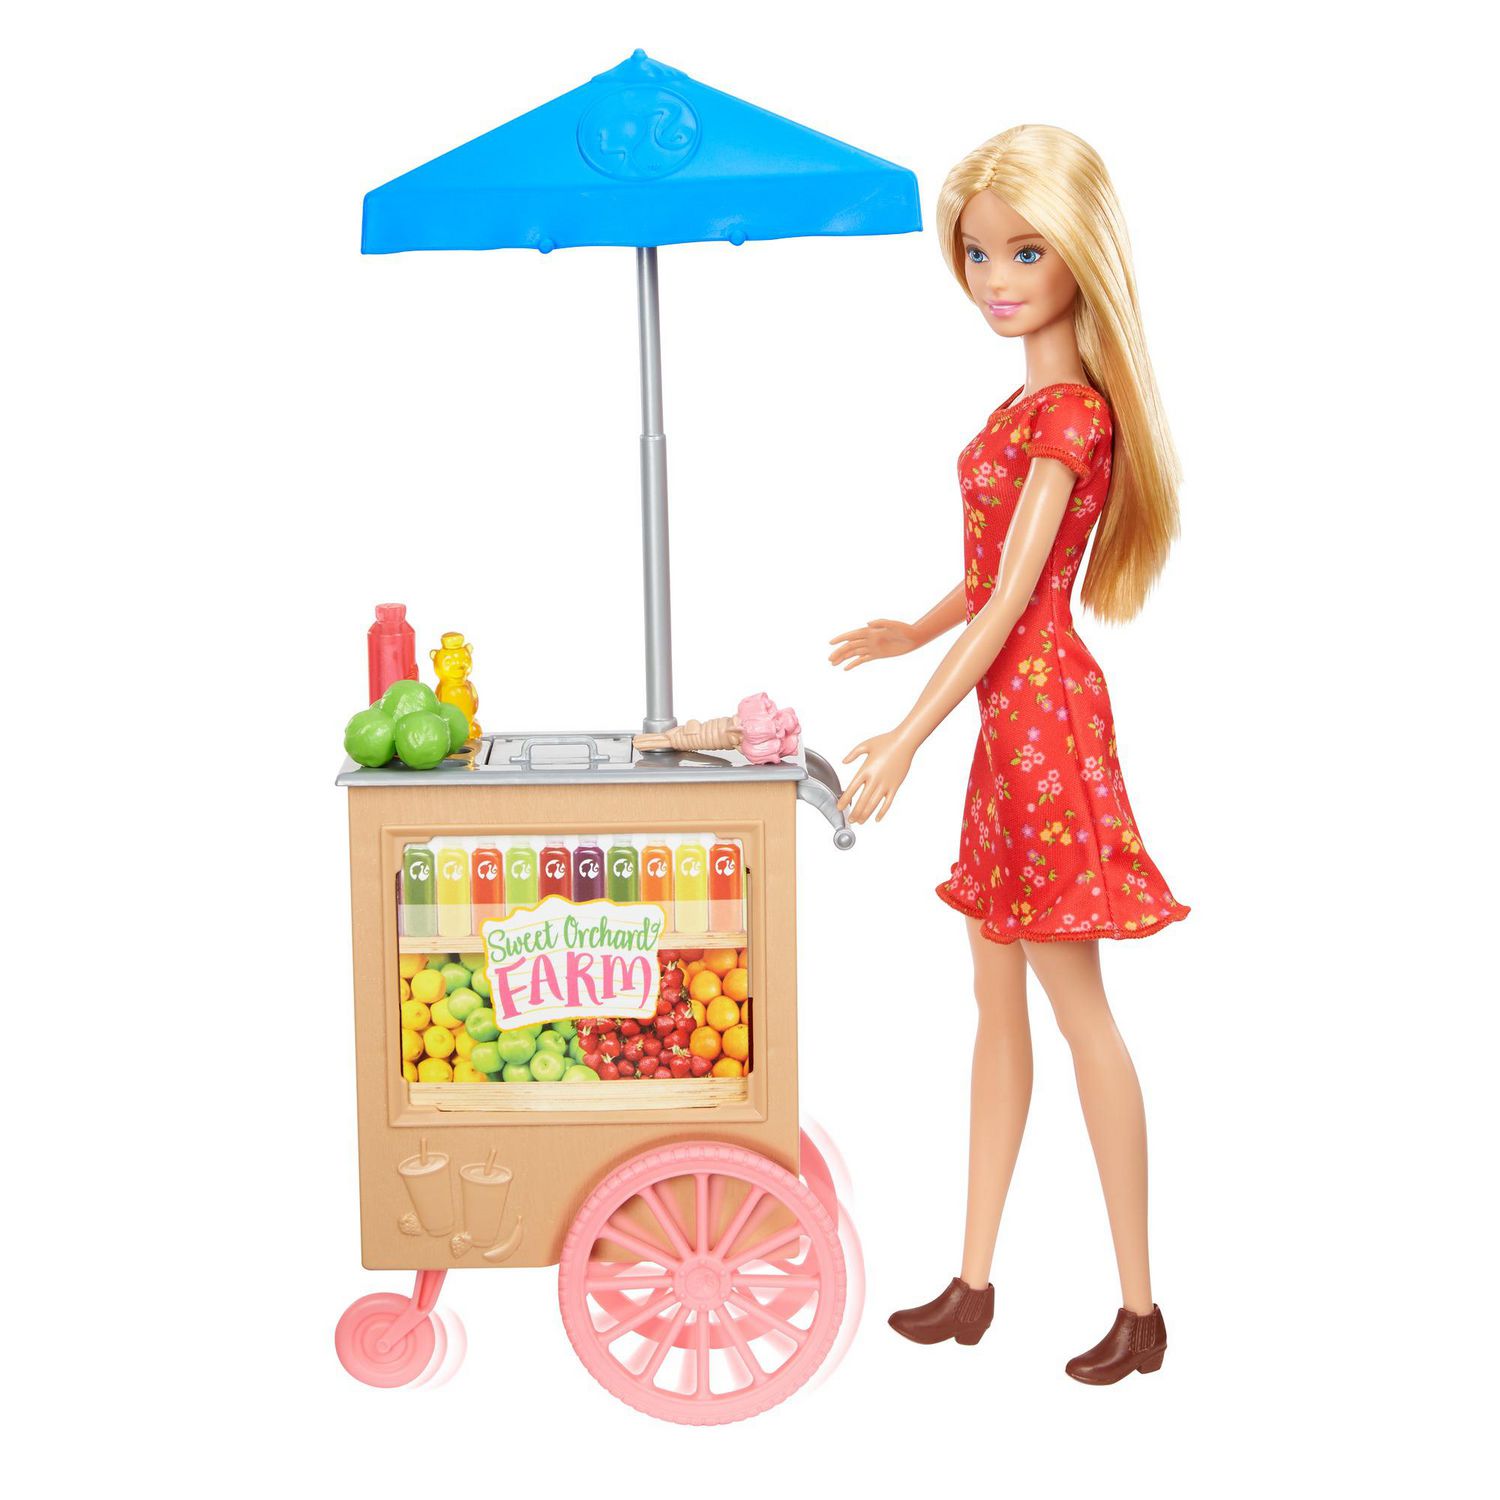 Barbie Sweet Orchard Farm Farmers Market Playset with Barbie Doll